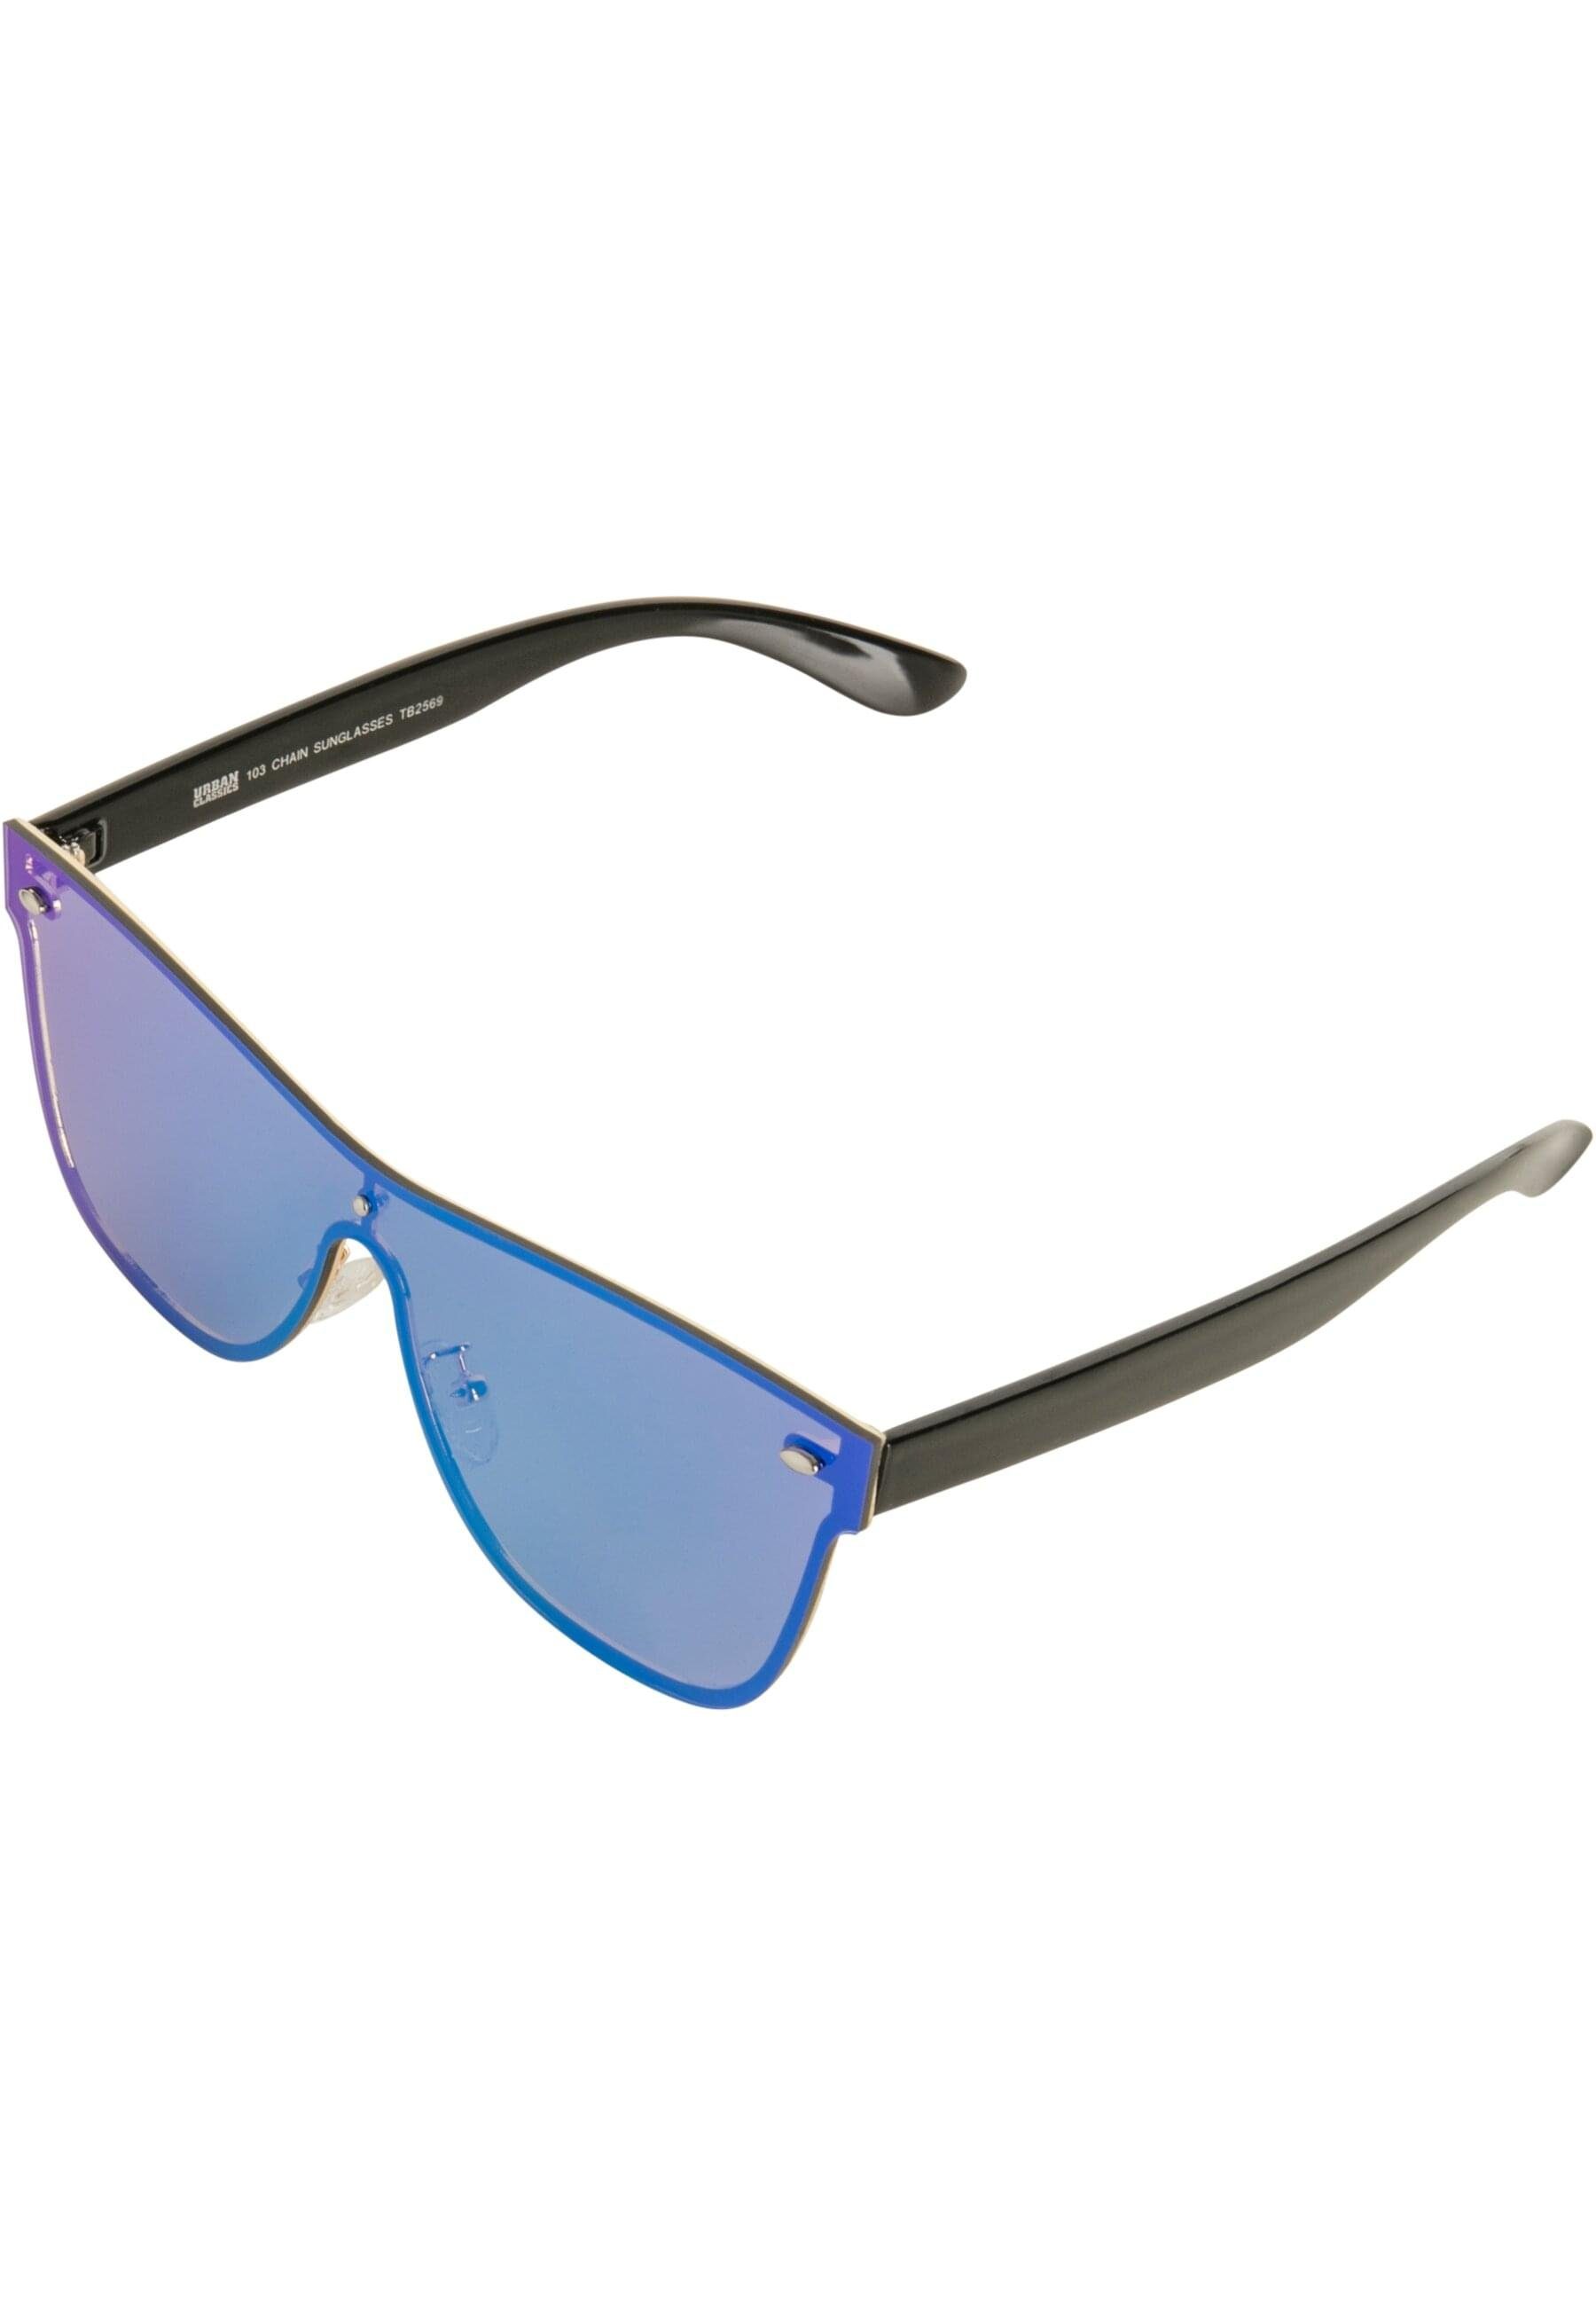 Chain blk/blue CLASSICS Sonnenbrille URBAN 103 Unisex Sunglasses